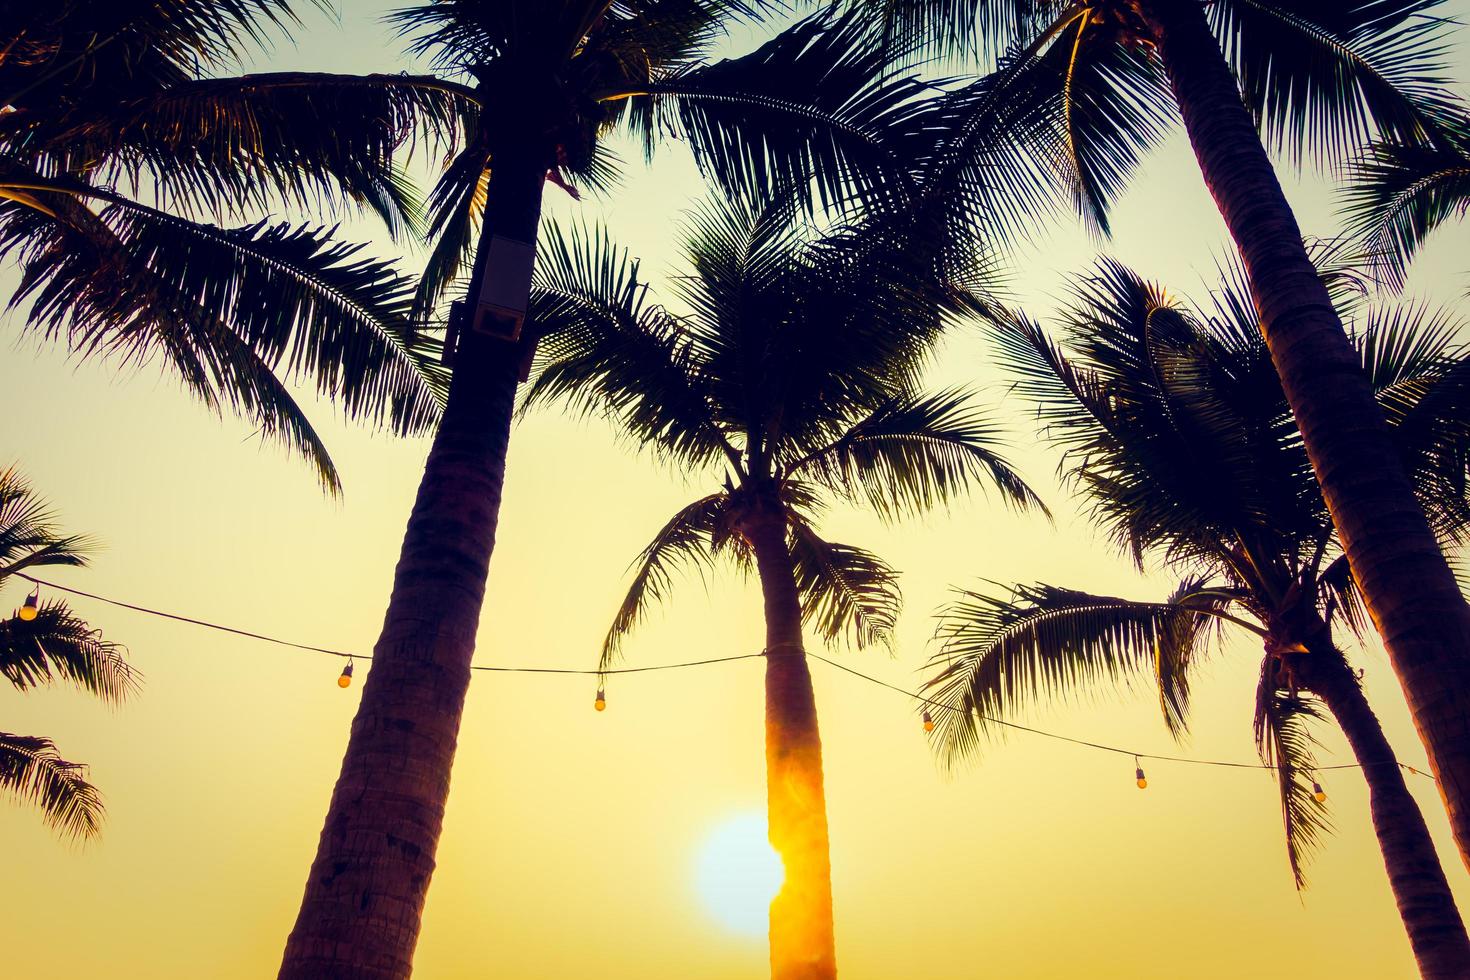 palmeiras ao pôr do sol foto